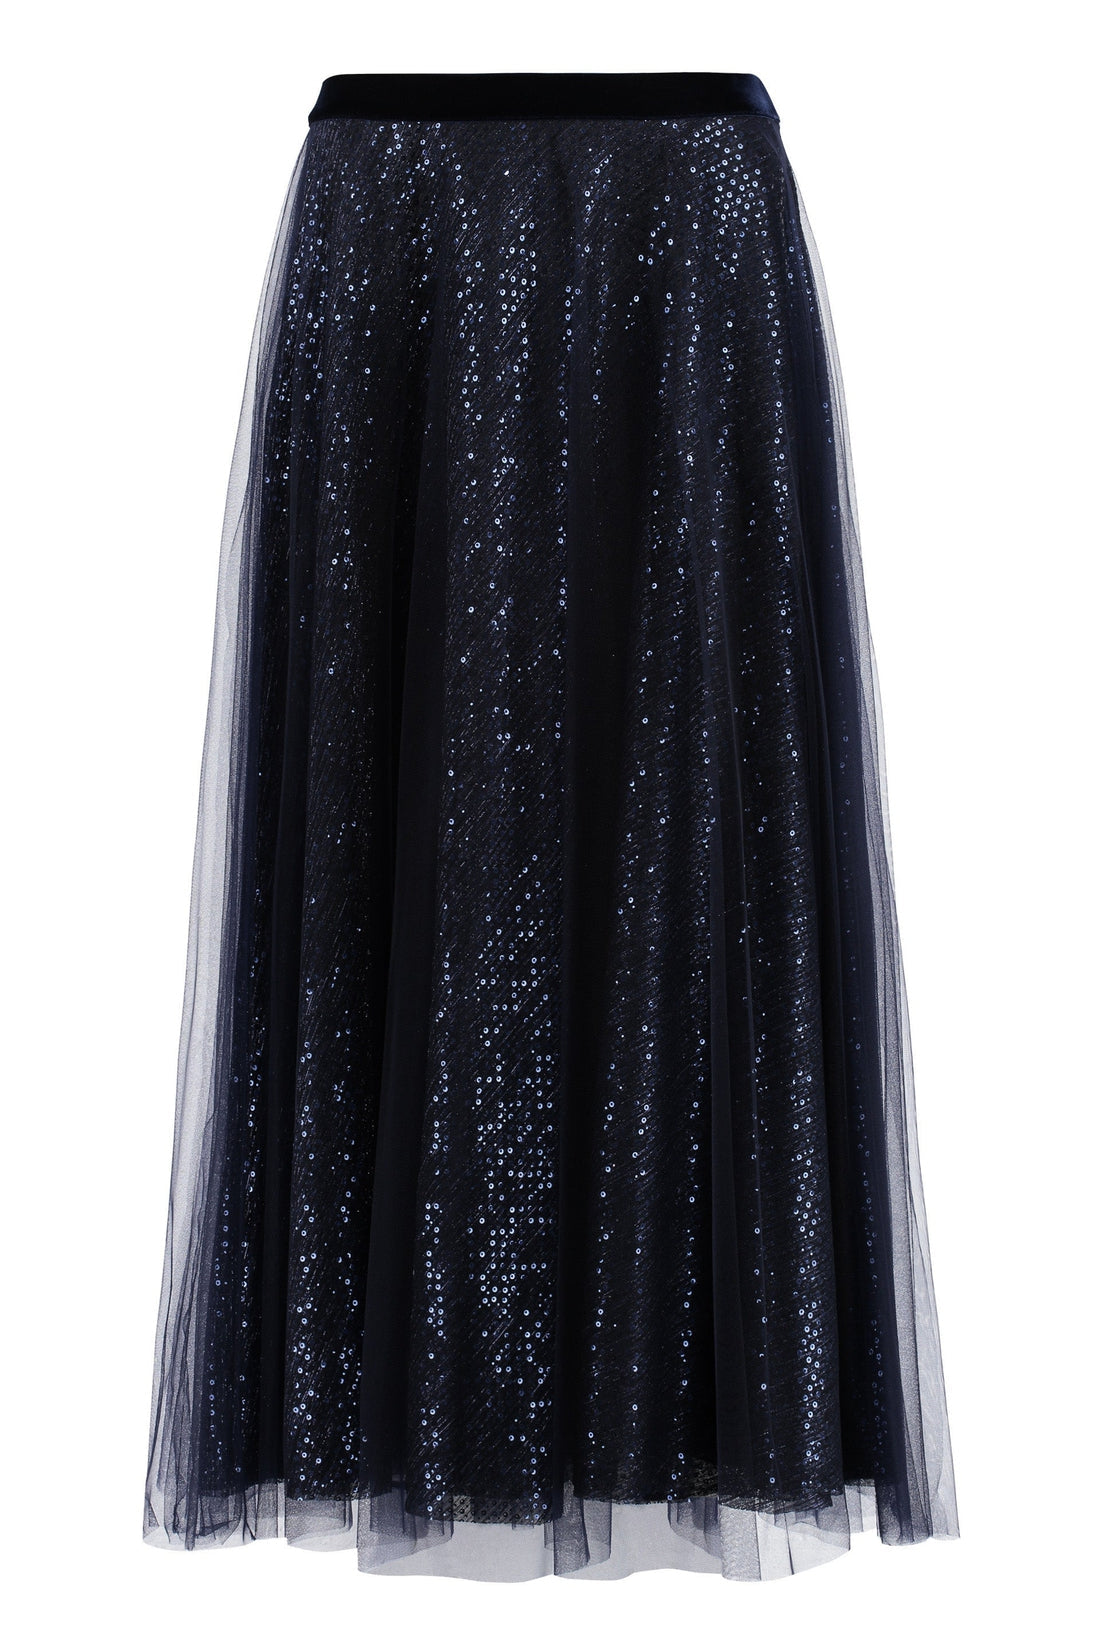 Talbot Runhof-OUTLET-SALE-Sequined tulle skirt-ARCHIVIST